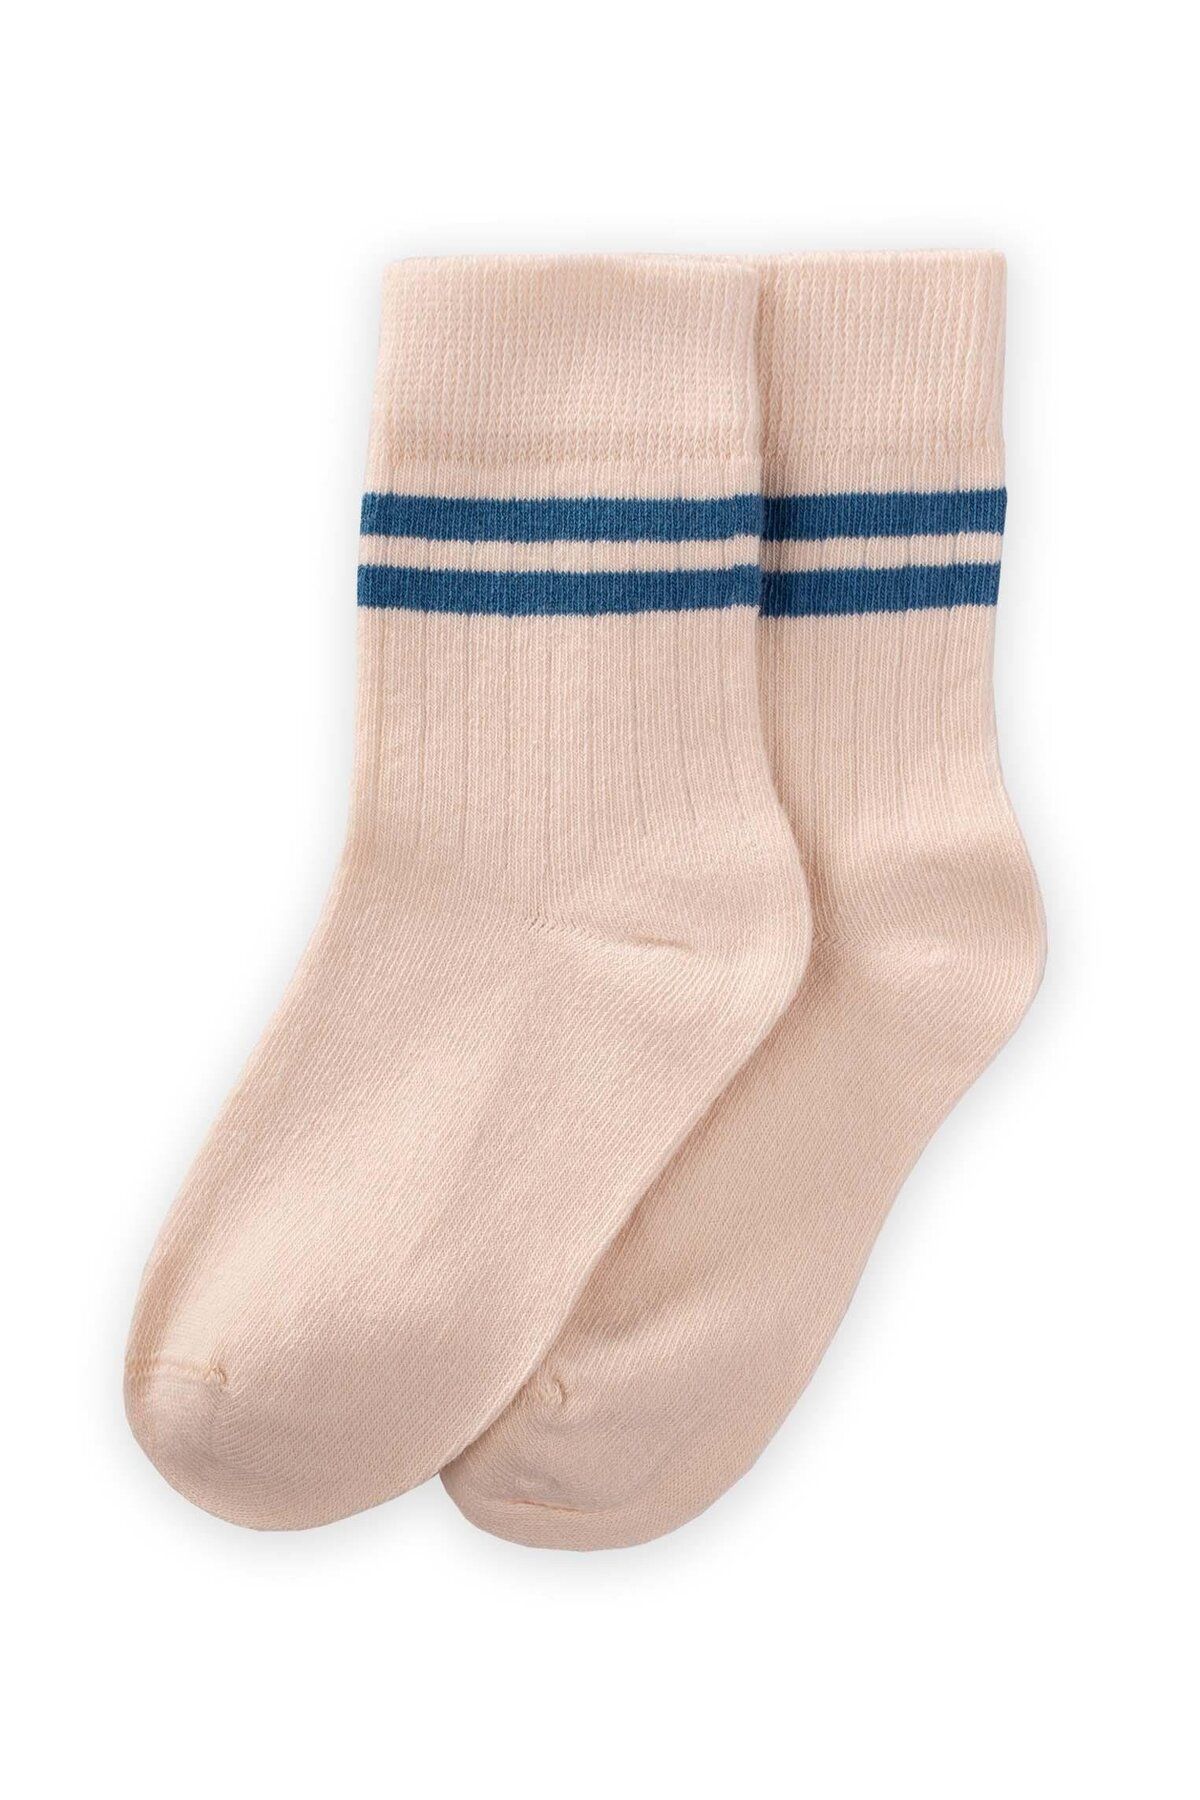 Cigit Çemberli Soket Çorap 2-9 Yaş İndigo Mavi